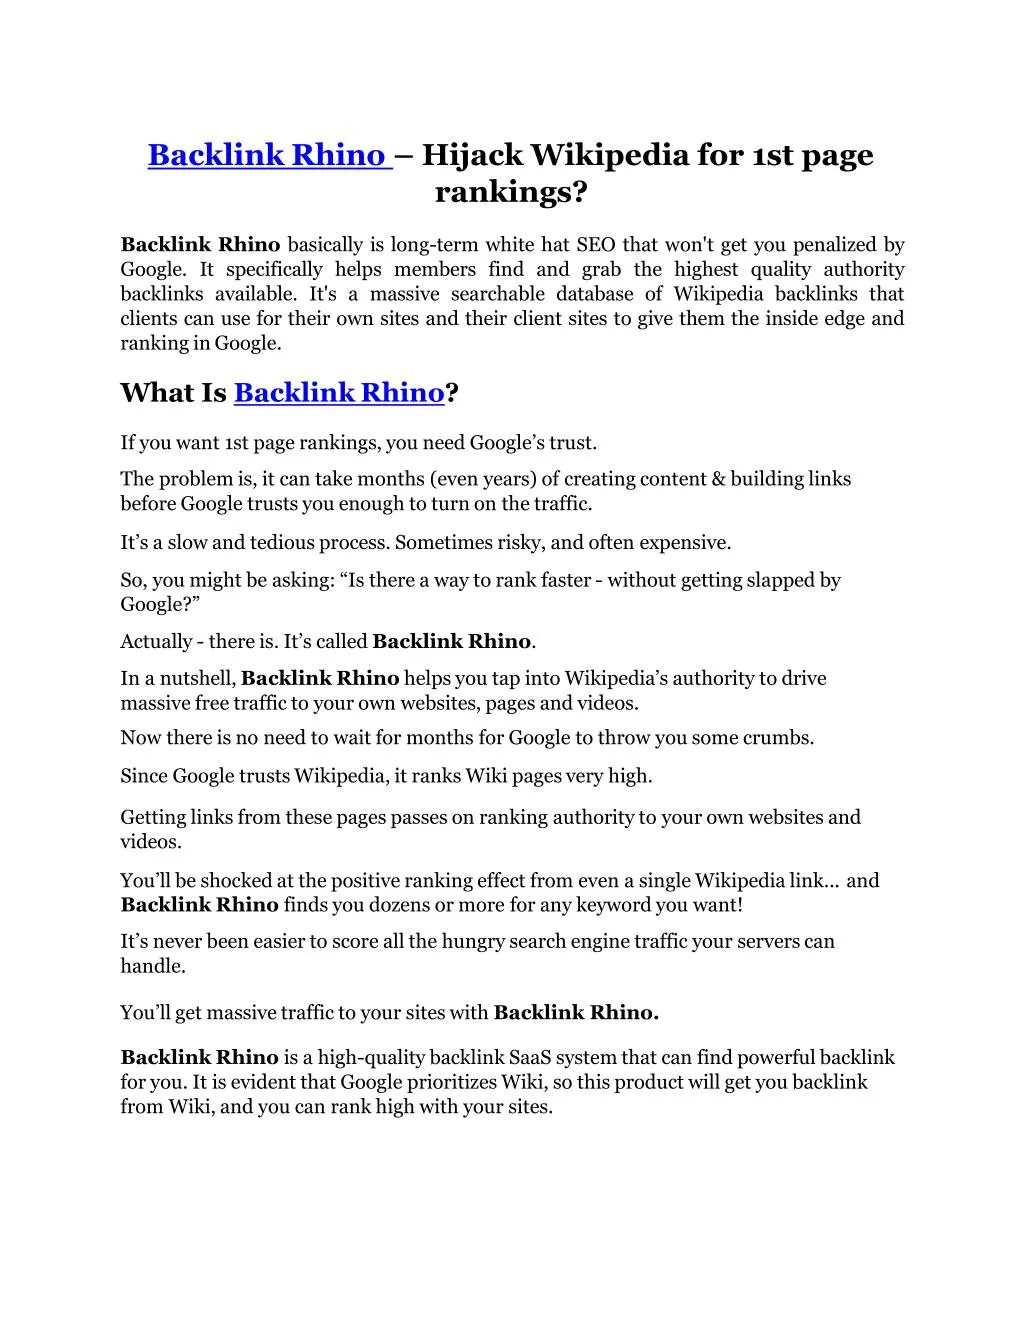 backlink rhino hijack wikipedia for 1st page